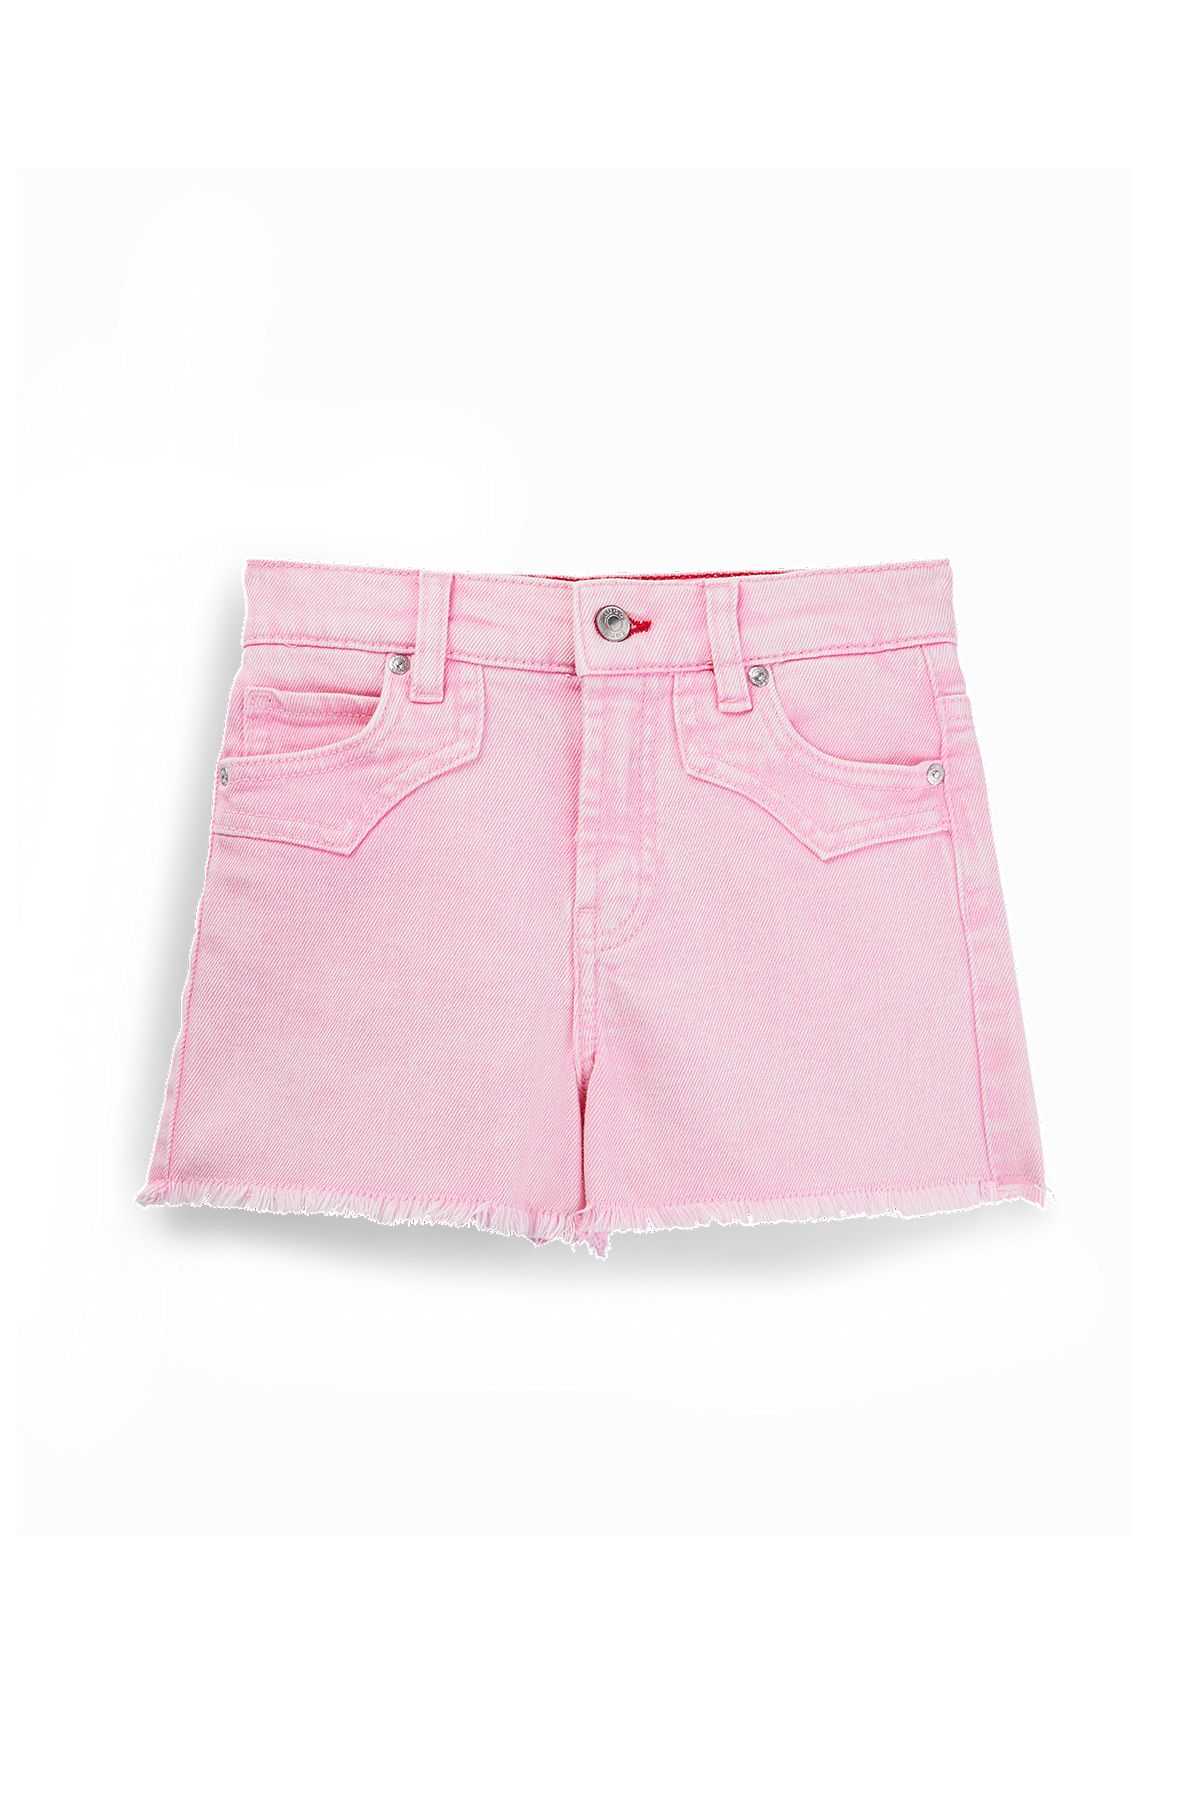 Kids' shorts in stretch denim with Western-inspired stitching, Pink